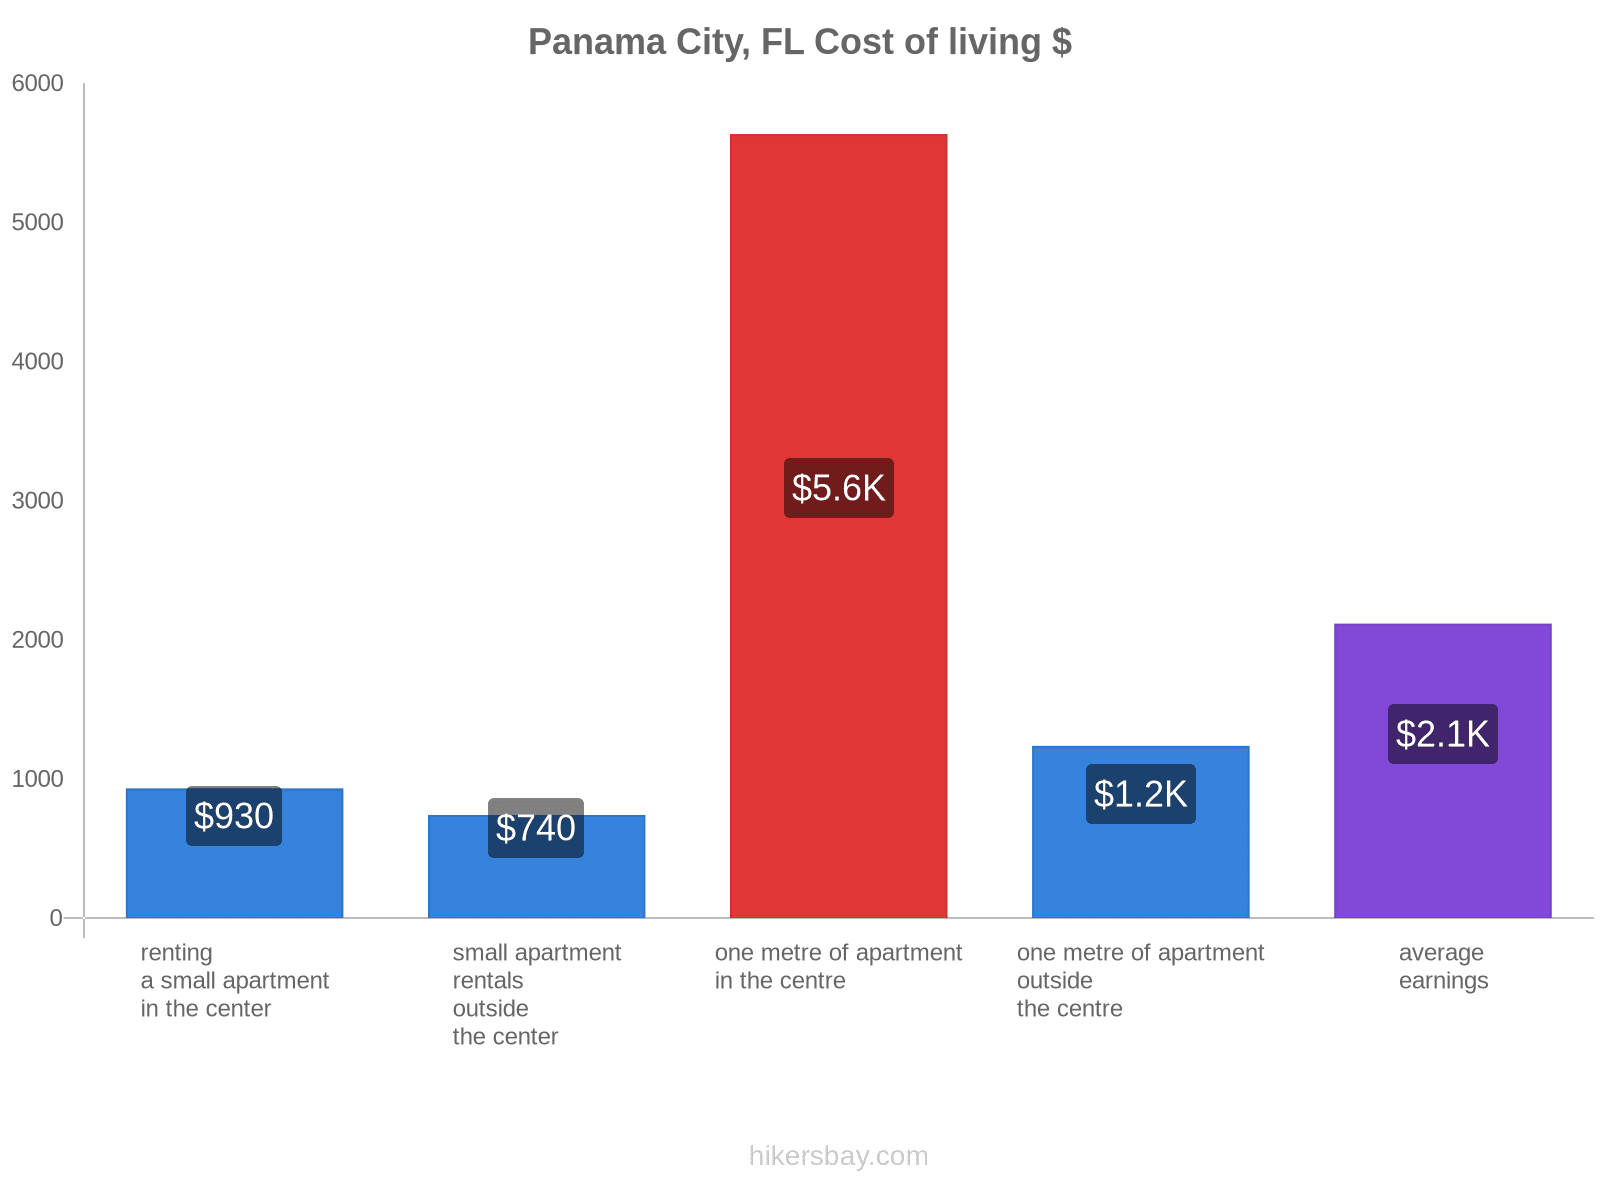 Panama City, FL cost of living hikersbay.com